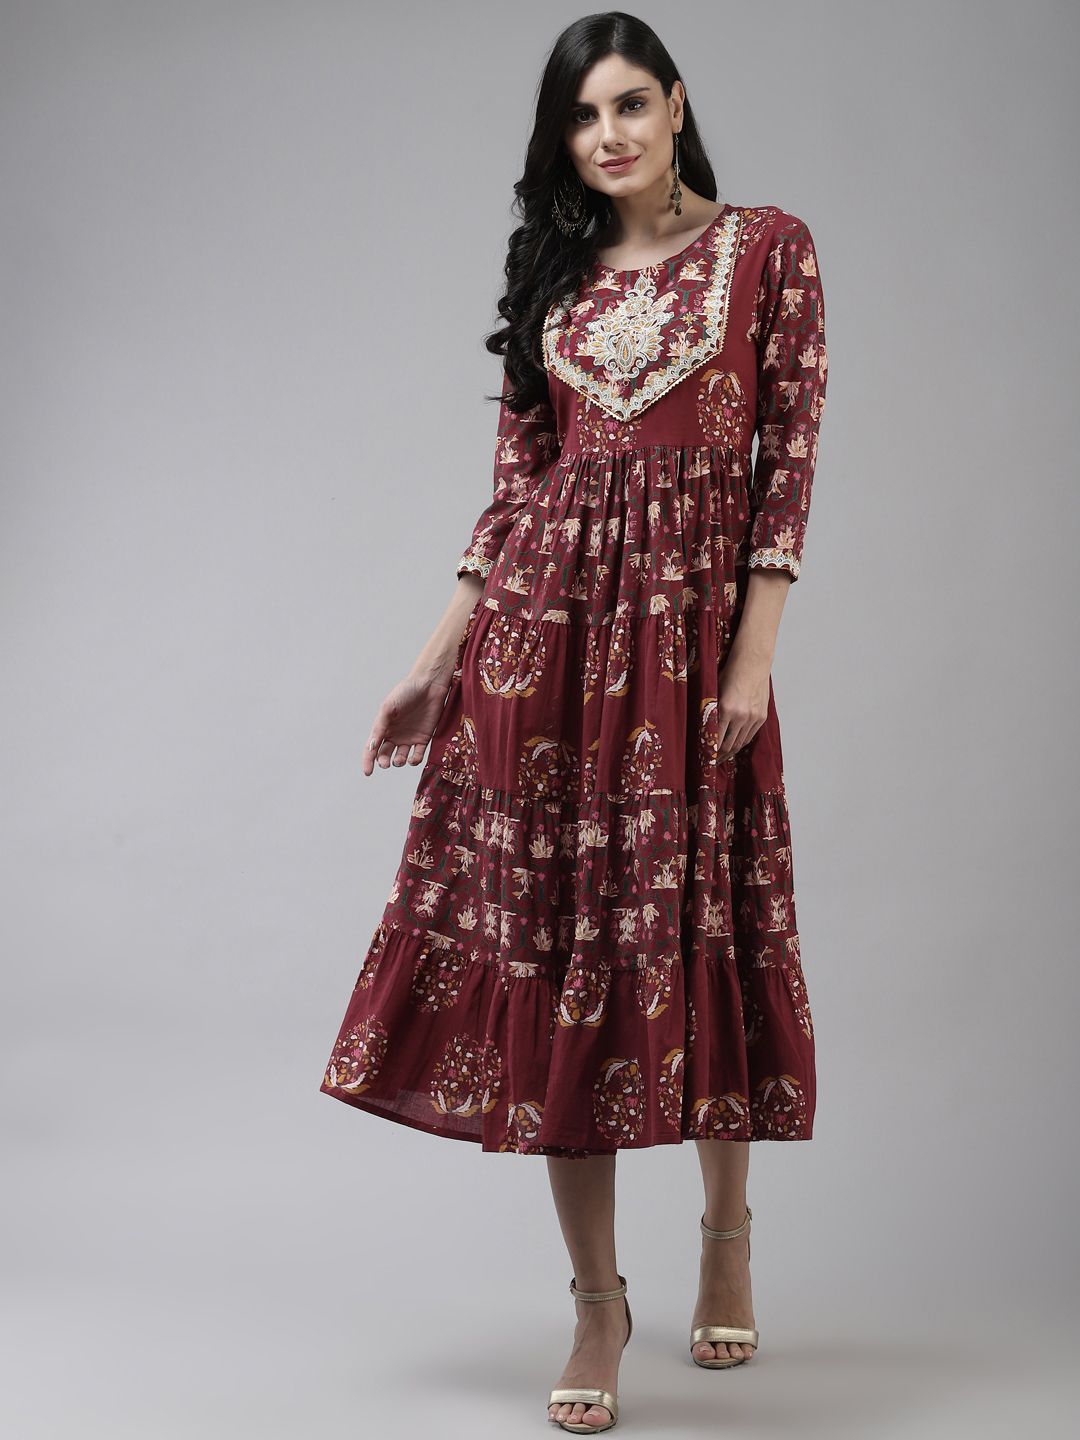 Yufta Maroon & White Ethnic Motifs Zari Embroidered Detail Cotton Ethnic Midi Dress Price in India